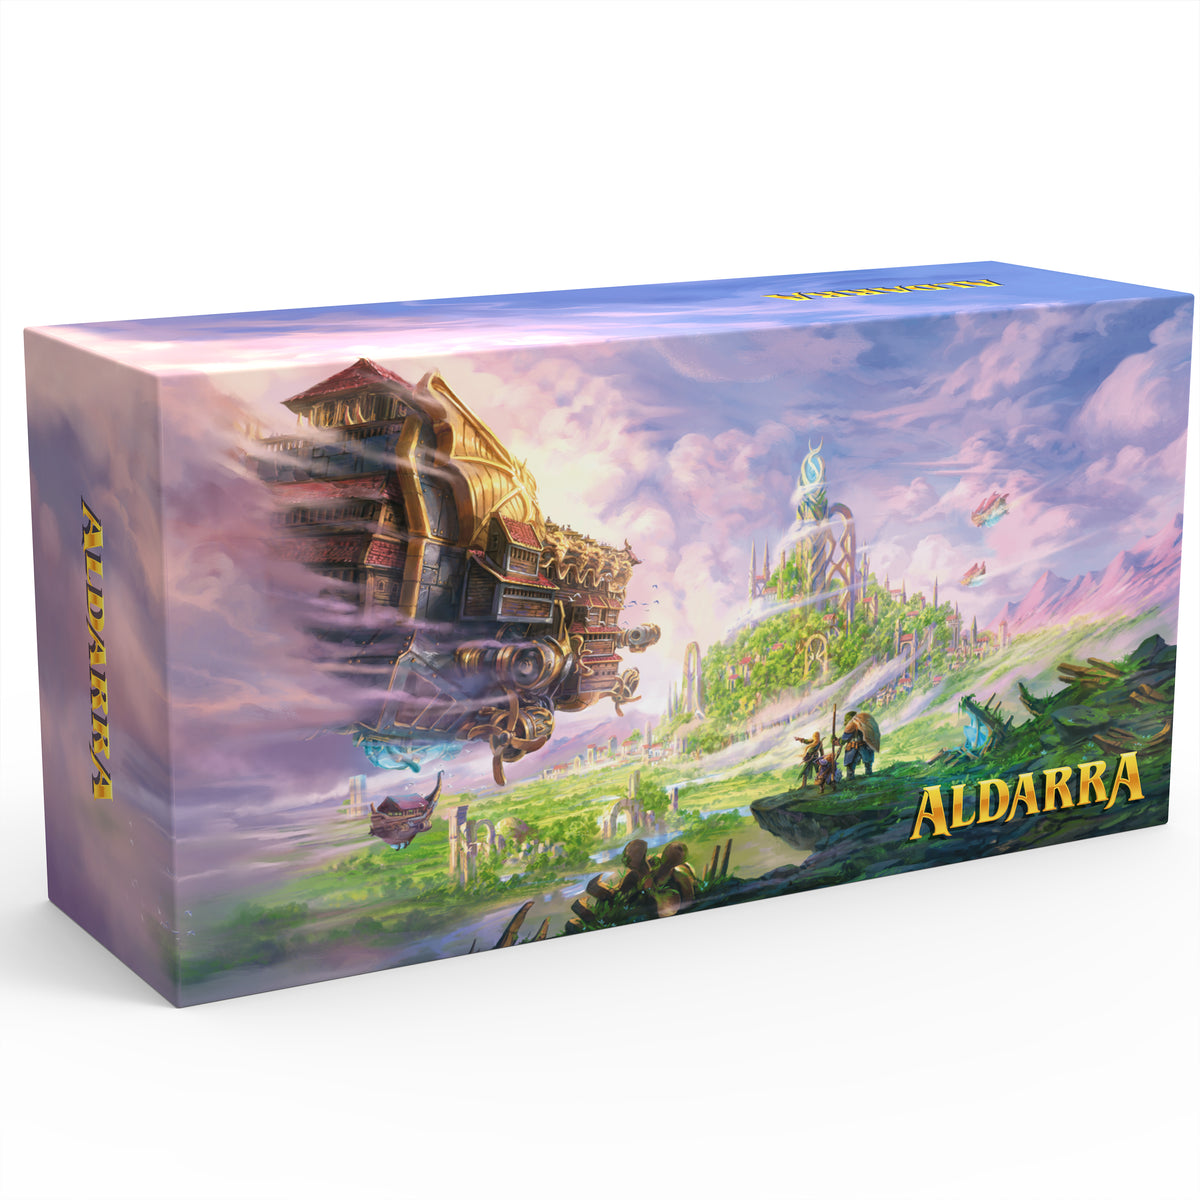 Aldarra - The Base Game